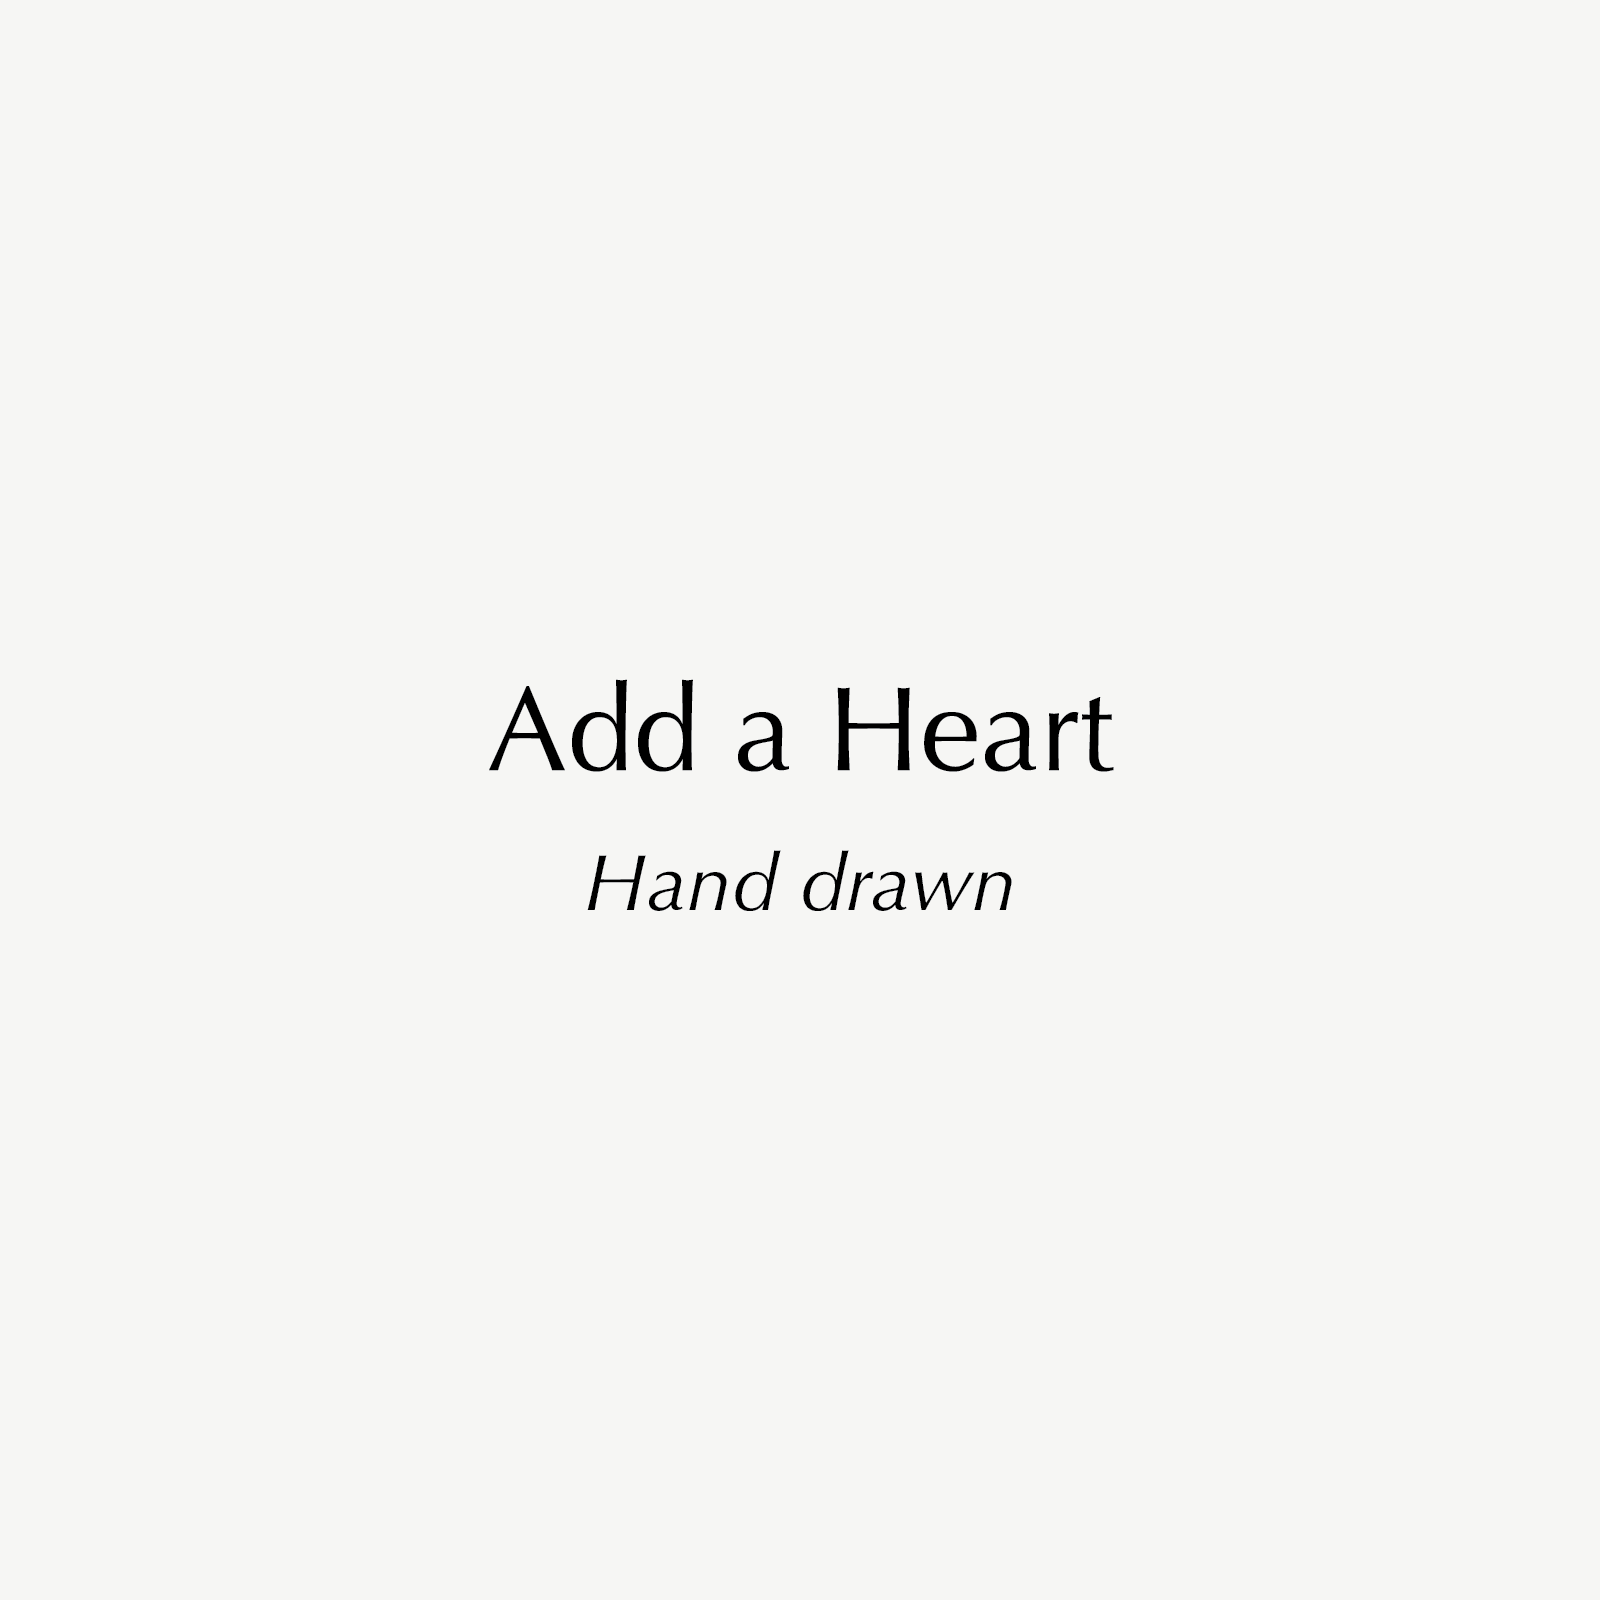 Add a hand drawn heart